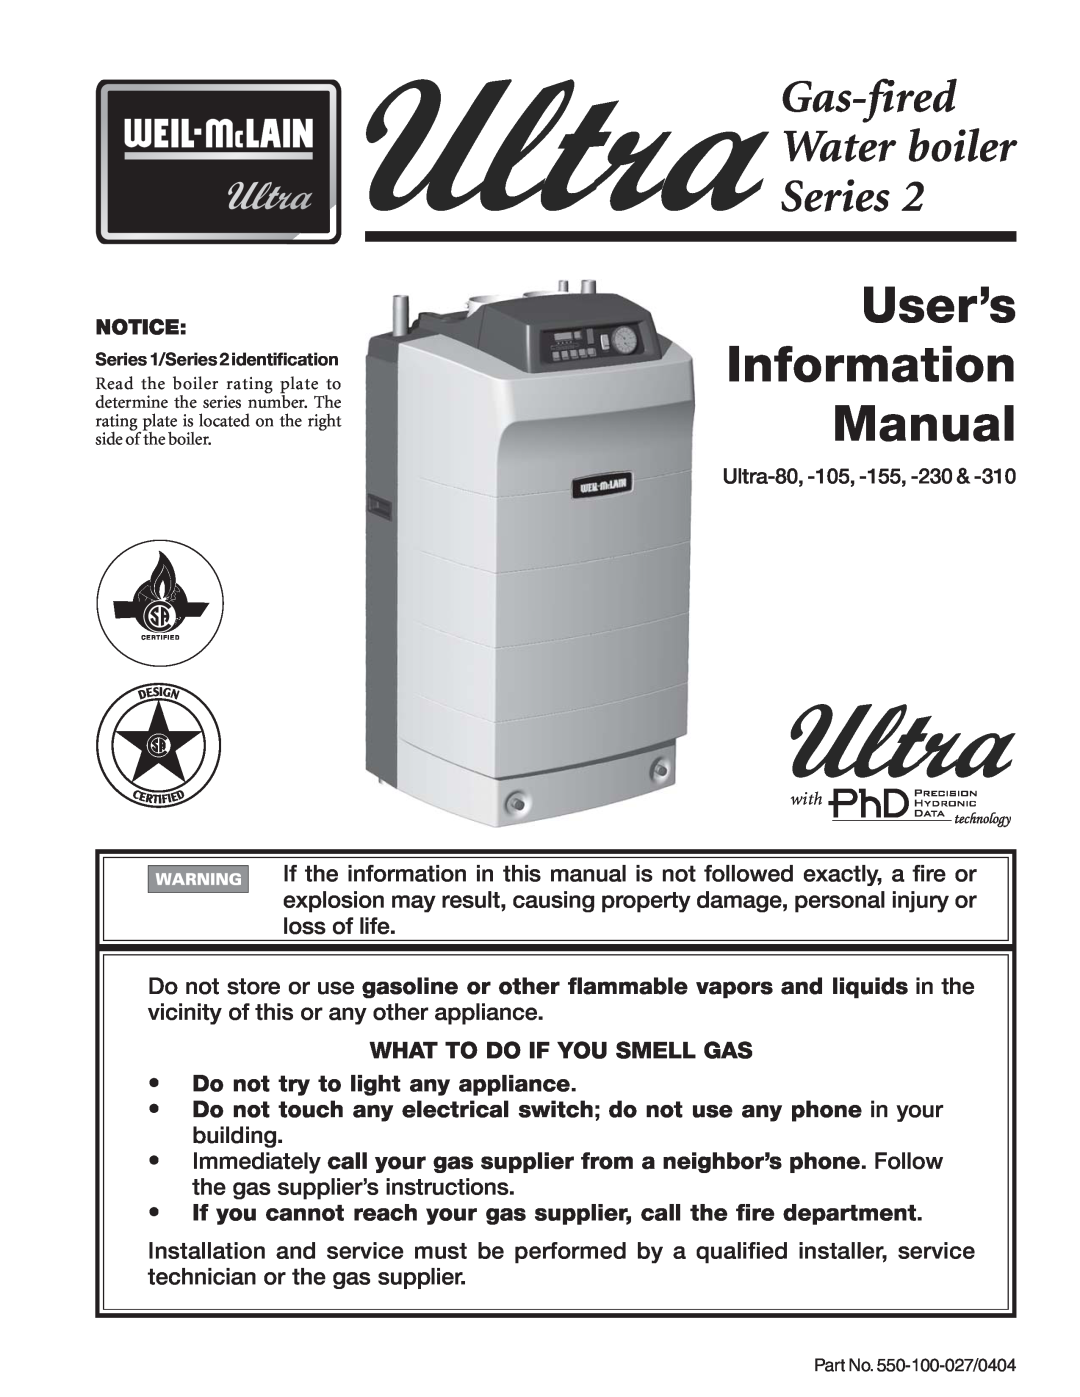 Weil-McLain Series 2 manual User’s Information Manual, Gas-firedWater boiler Series 